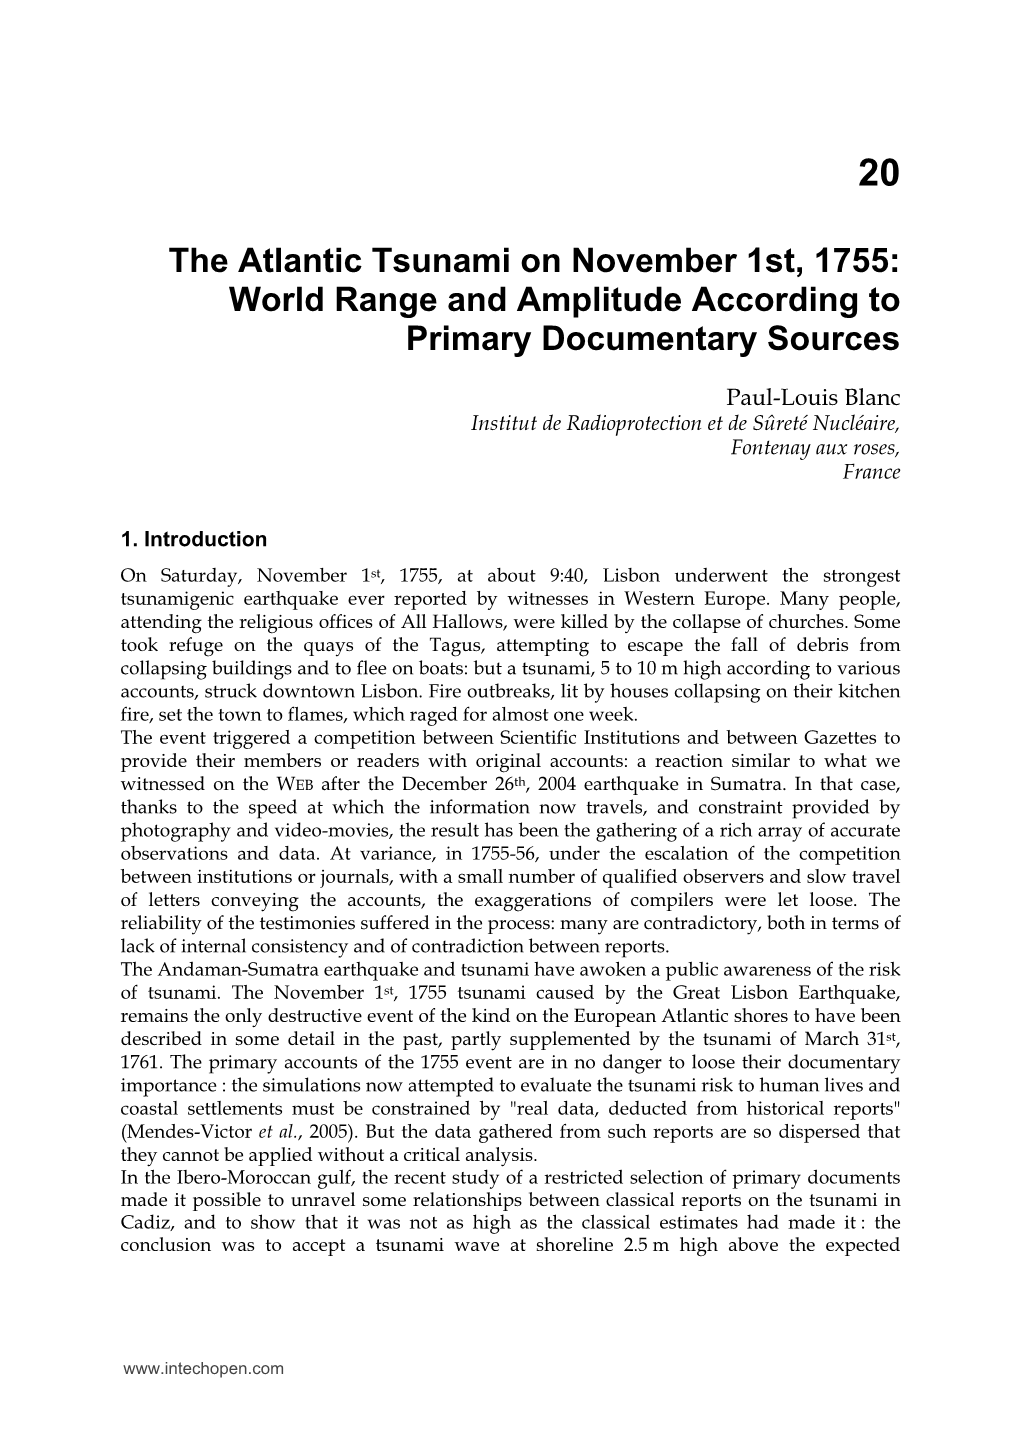 The Atlantic Tsunami on November 1St, 1755: World Range and Amplitude According to Primary Documentary Sources